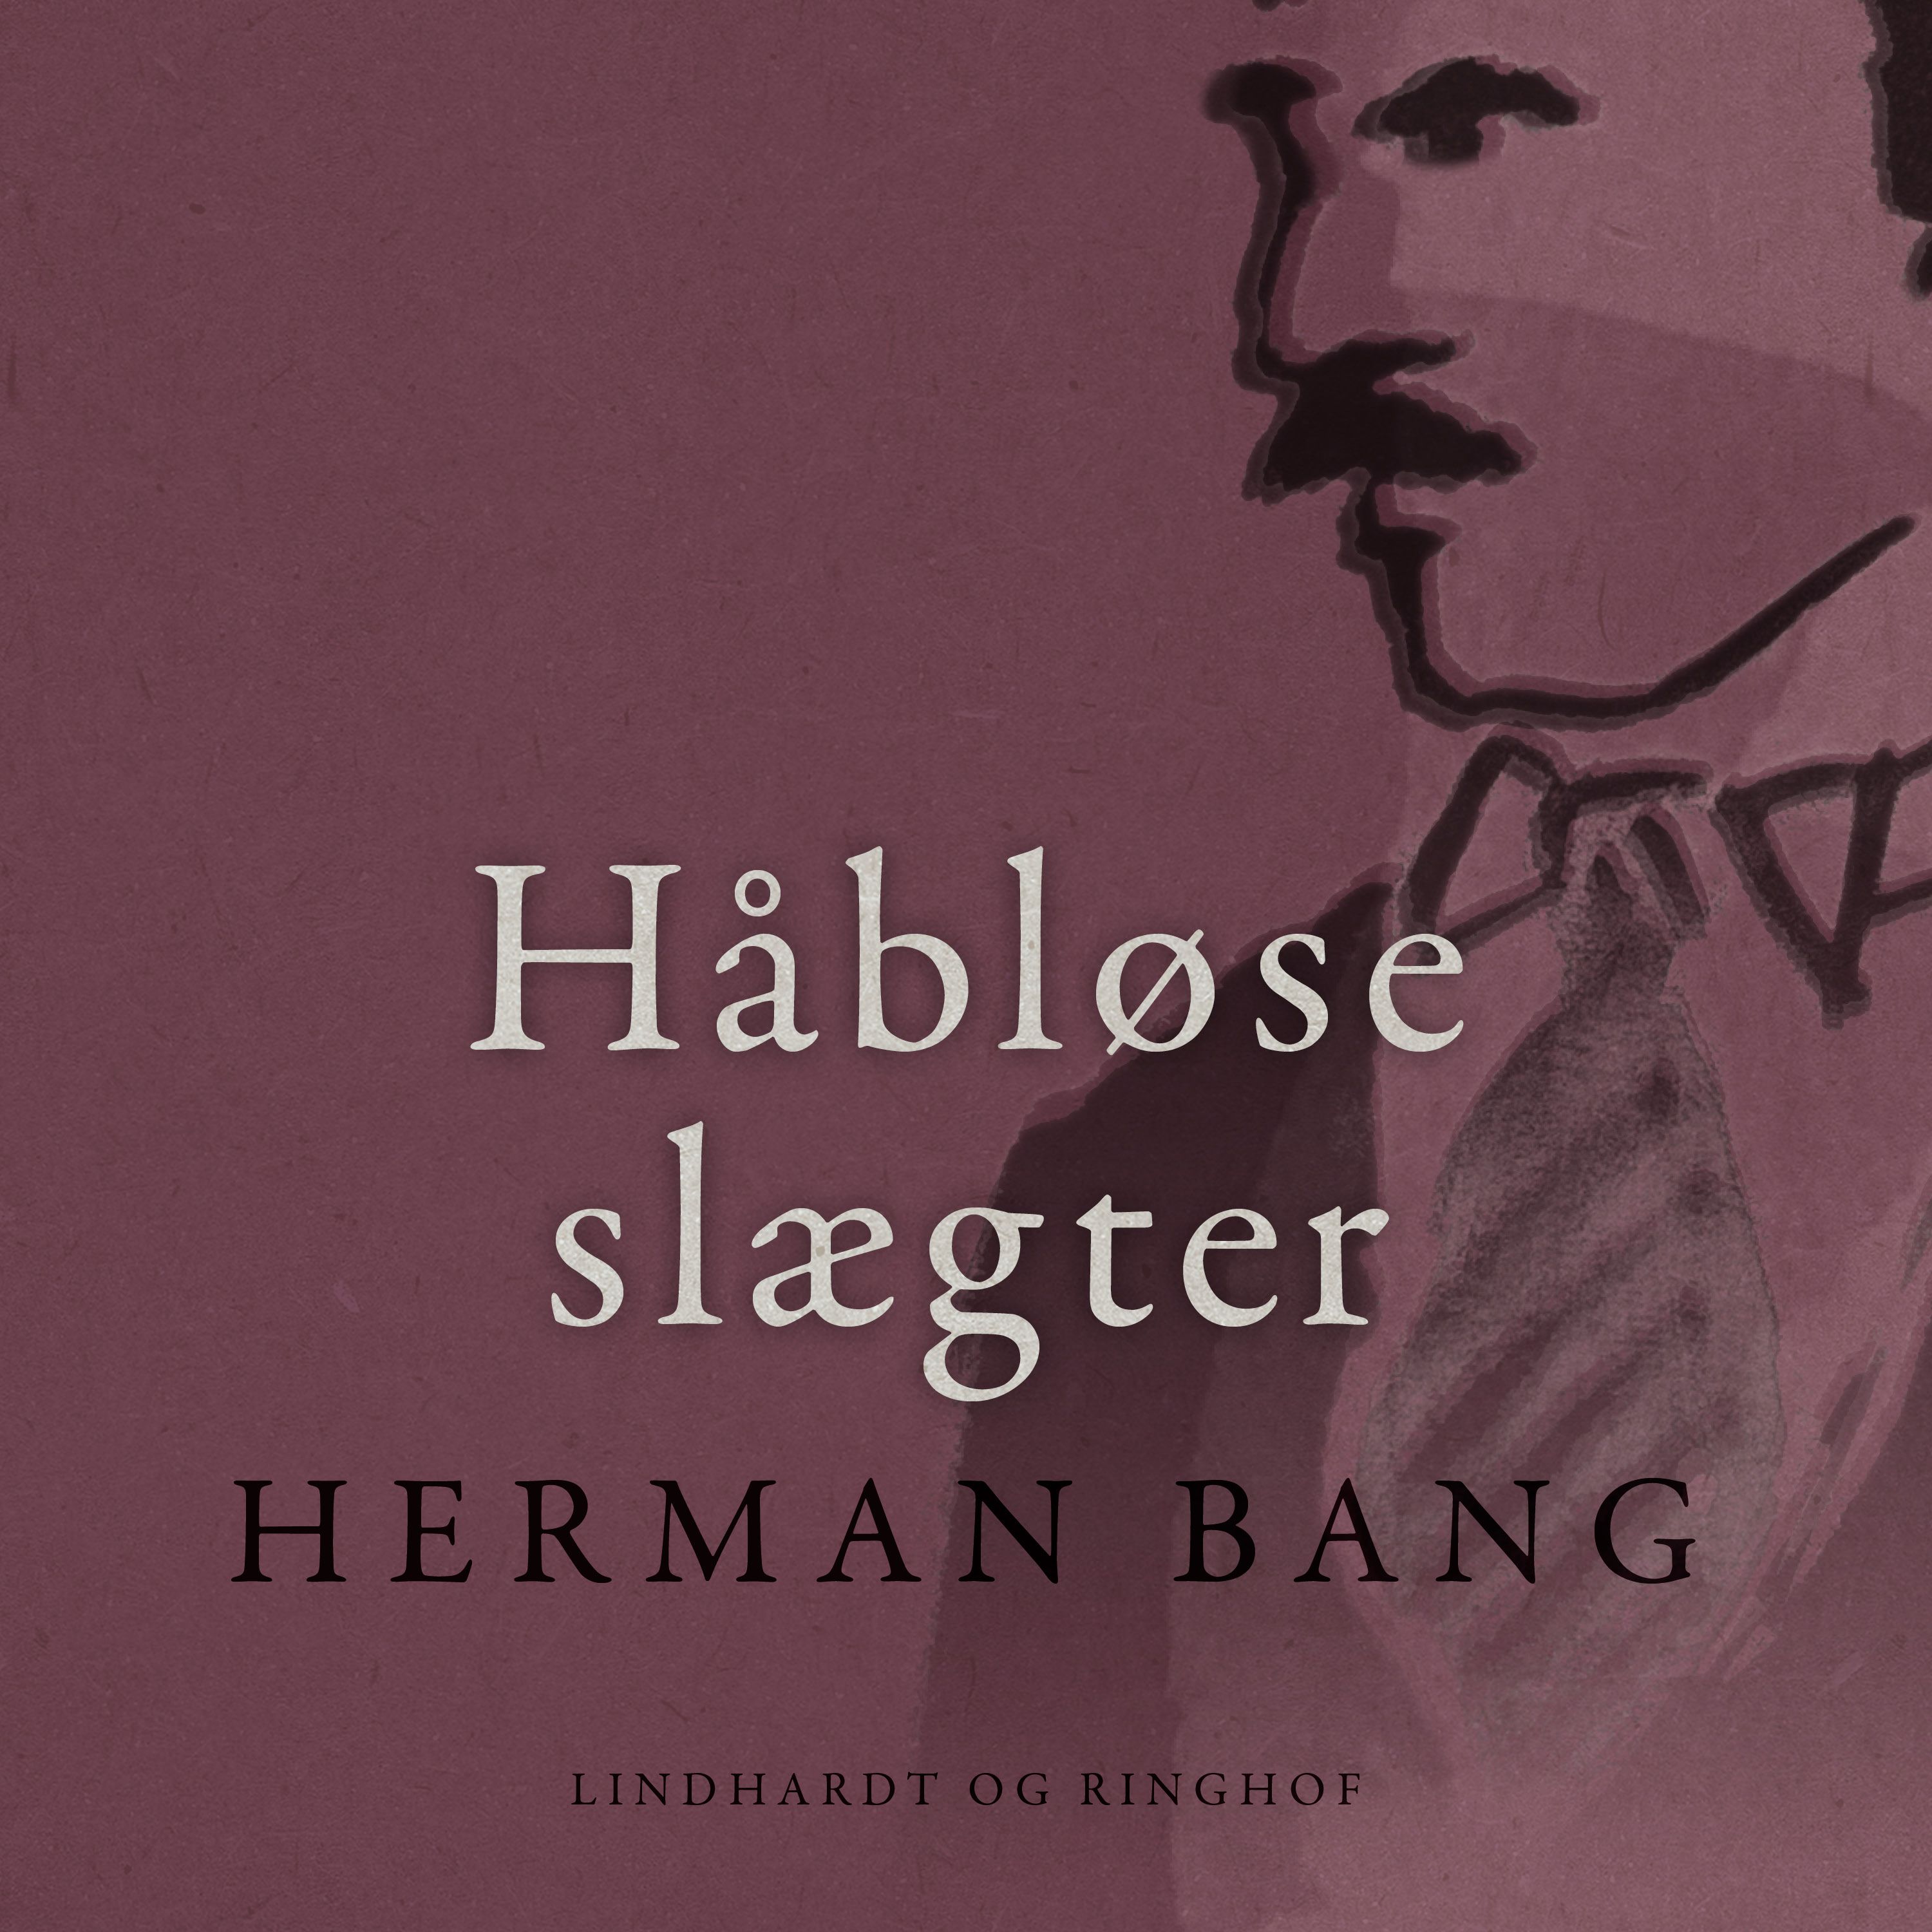 Håbløse slægter, ljudbok av Herman Bang